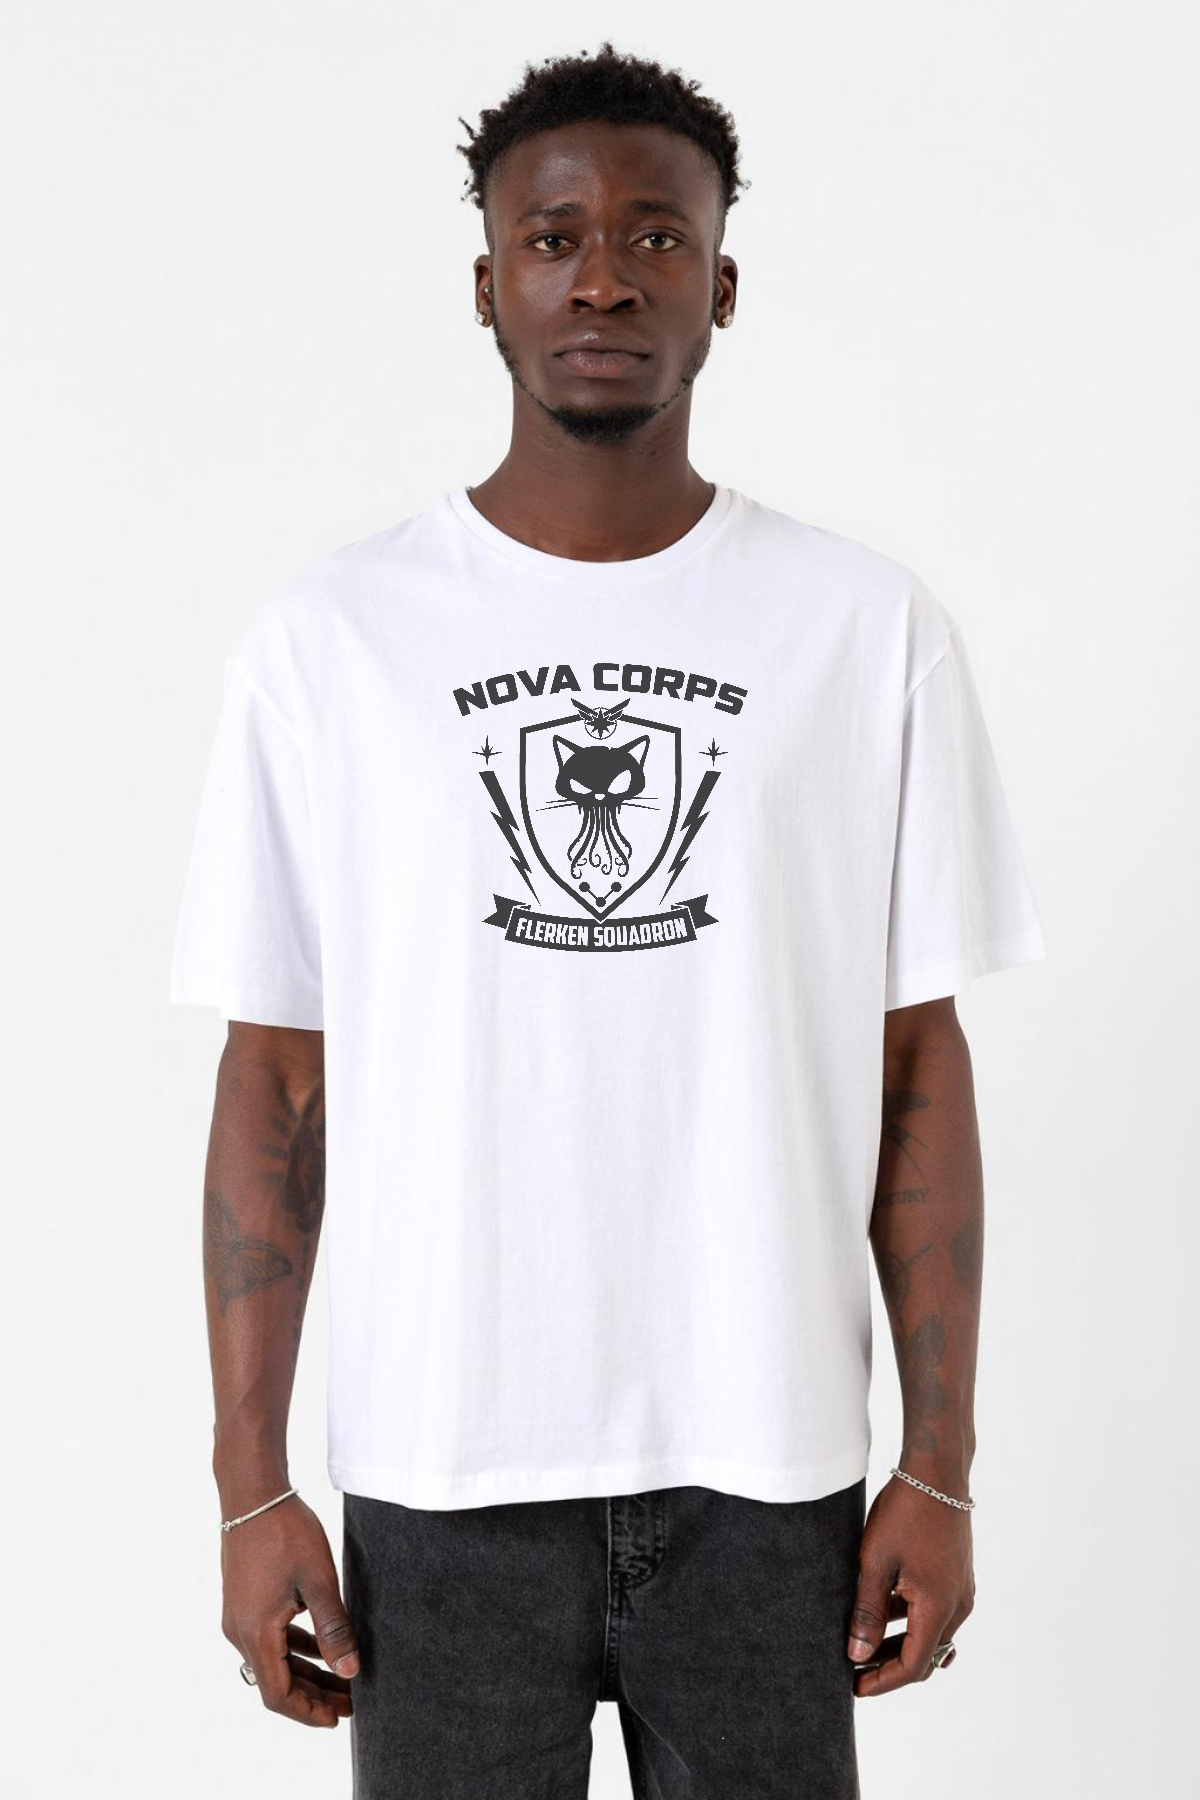 Nova Corps Flerken Squadron Beyaz Erkek Oversize Tshirt